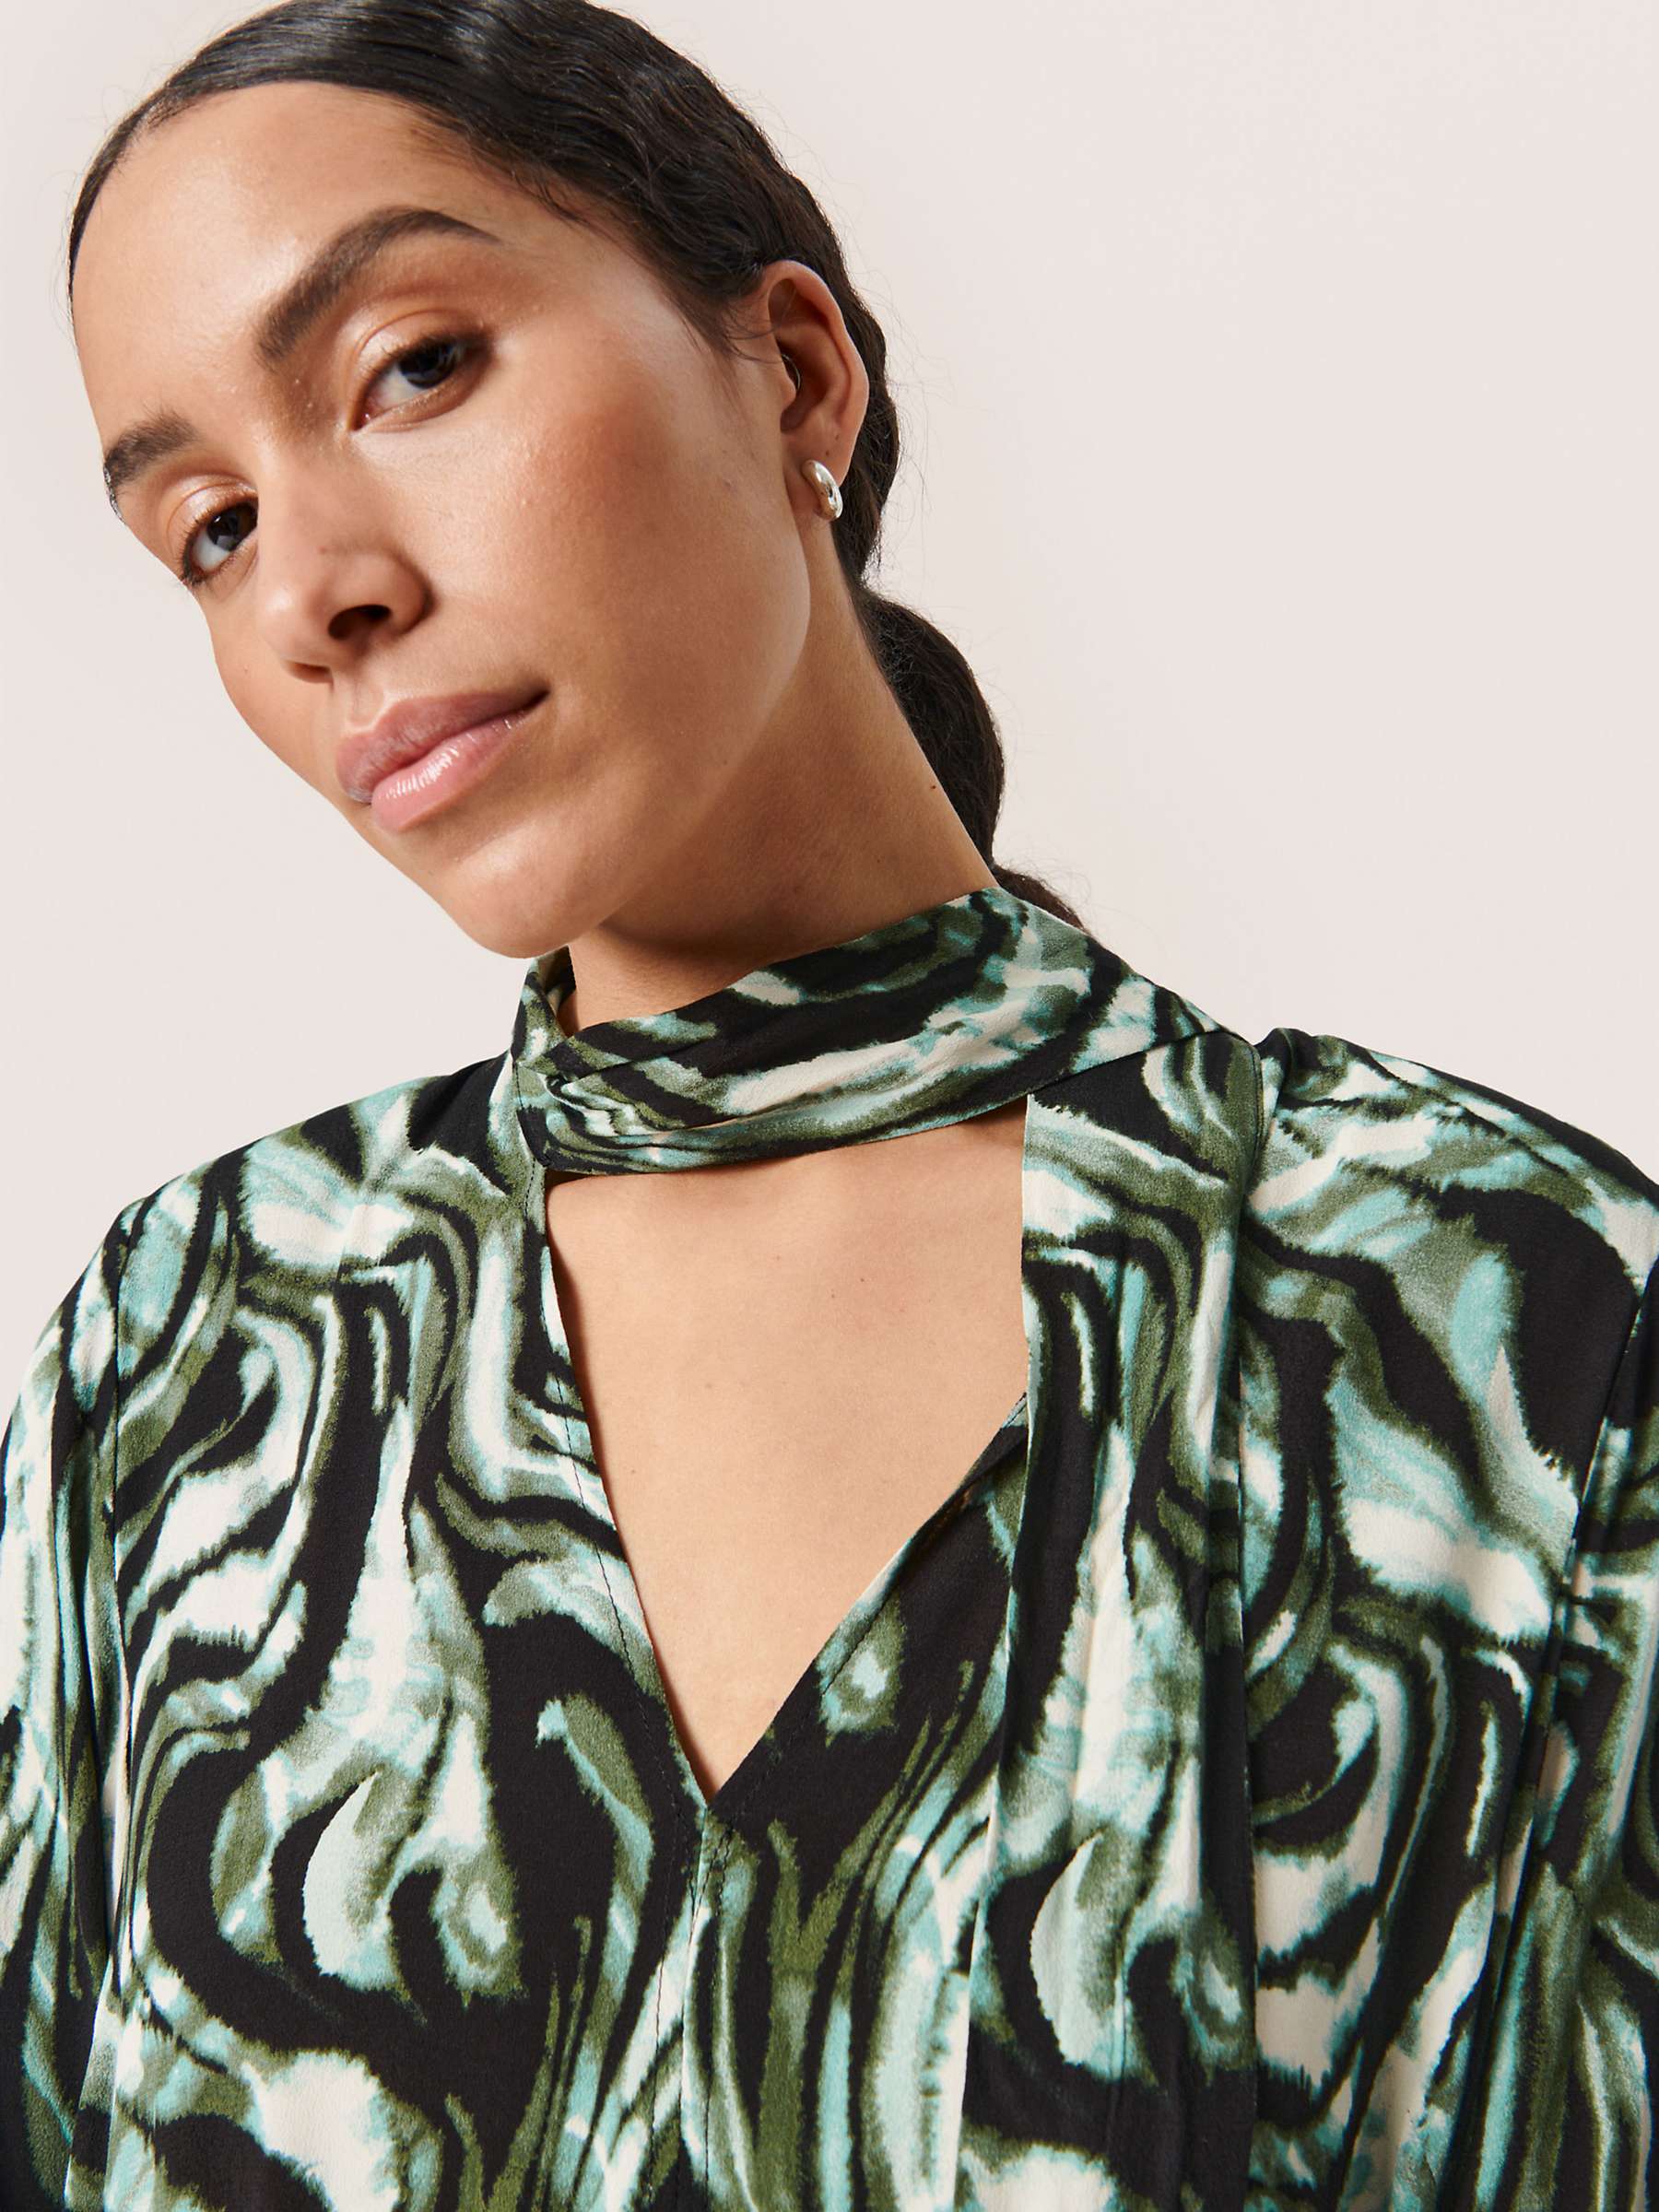 Buy Soaked In Luxury Kenna Tie Neck Long Sleeve Dress, Green/Multi Online at johnlewis.com